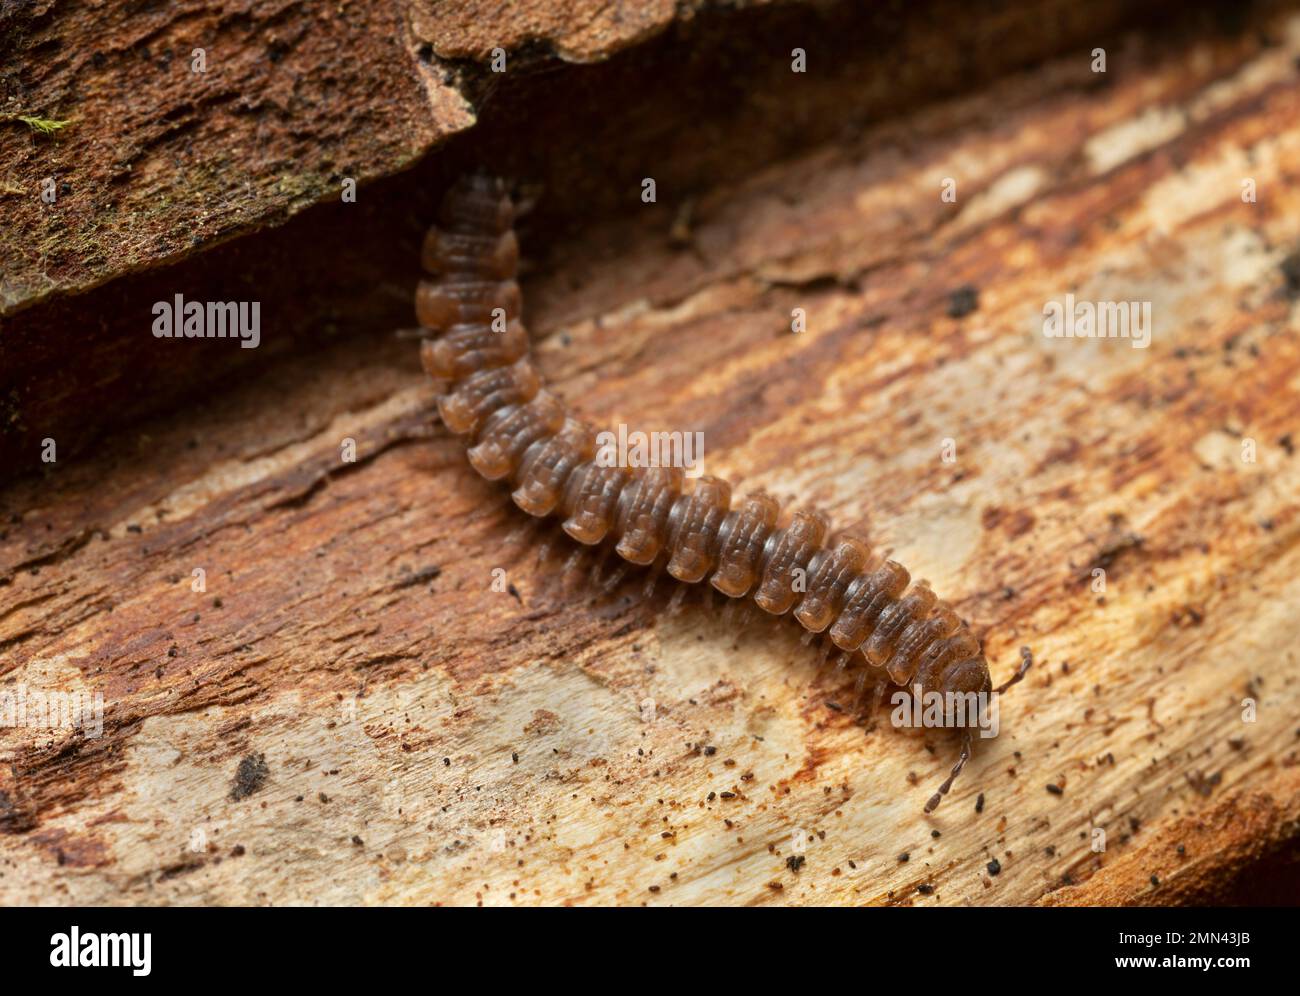 Flat-backed millipede, Polydesmus complanatus on wood, macro photo Stock Photo